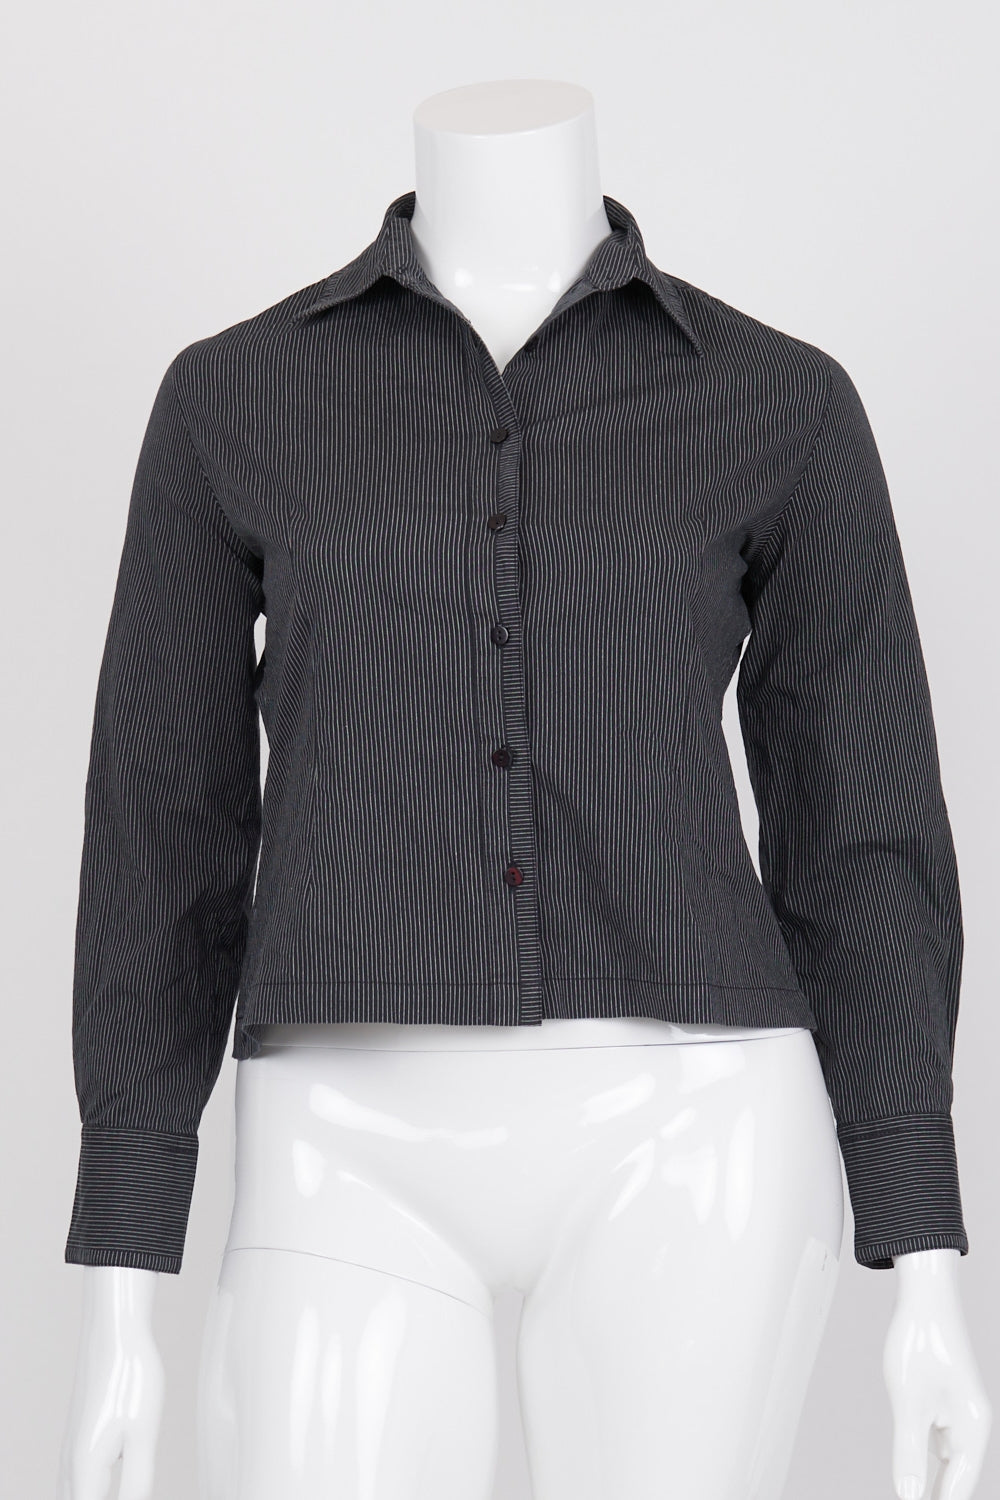 Rivette & Blair Black Striped Button-Up Shirt 16